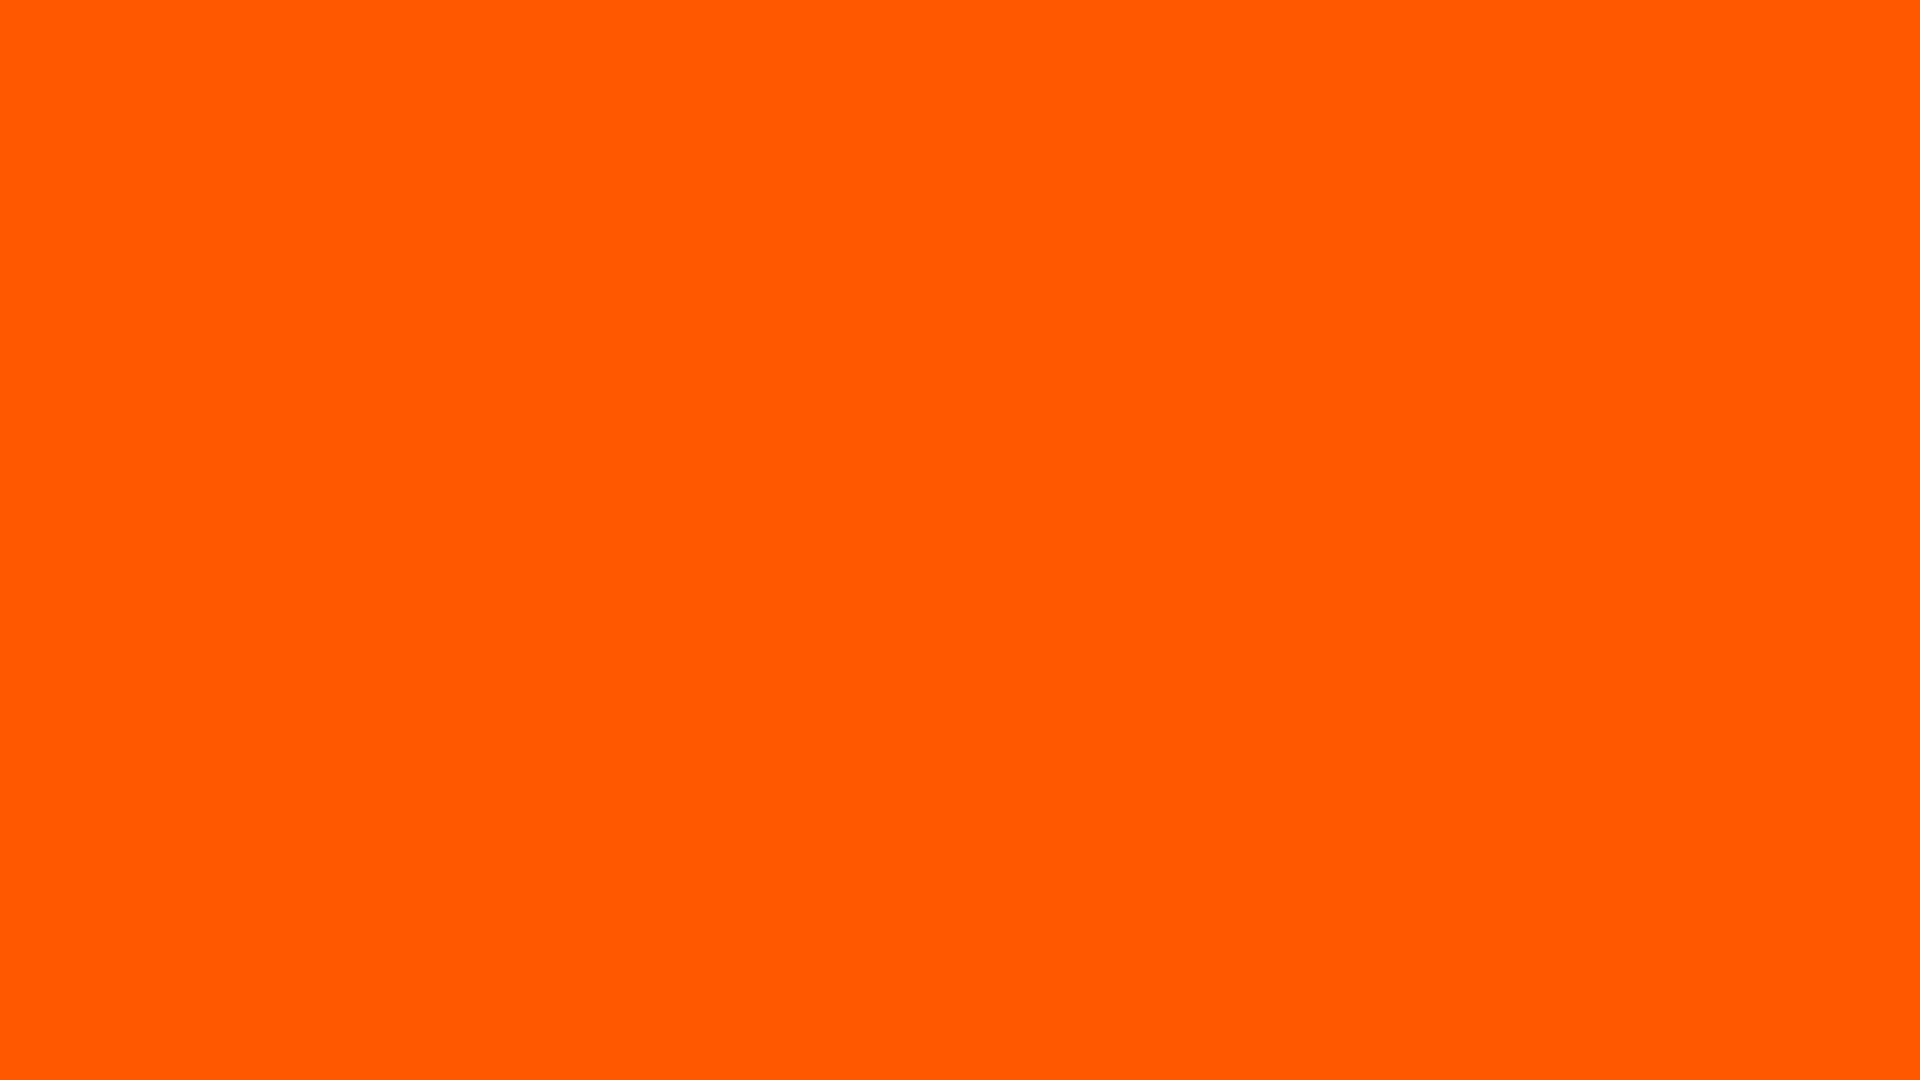 1920x1080 Orange Pantone Solid Color Background